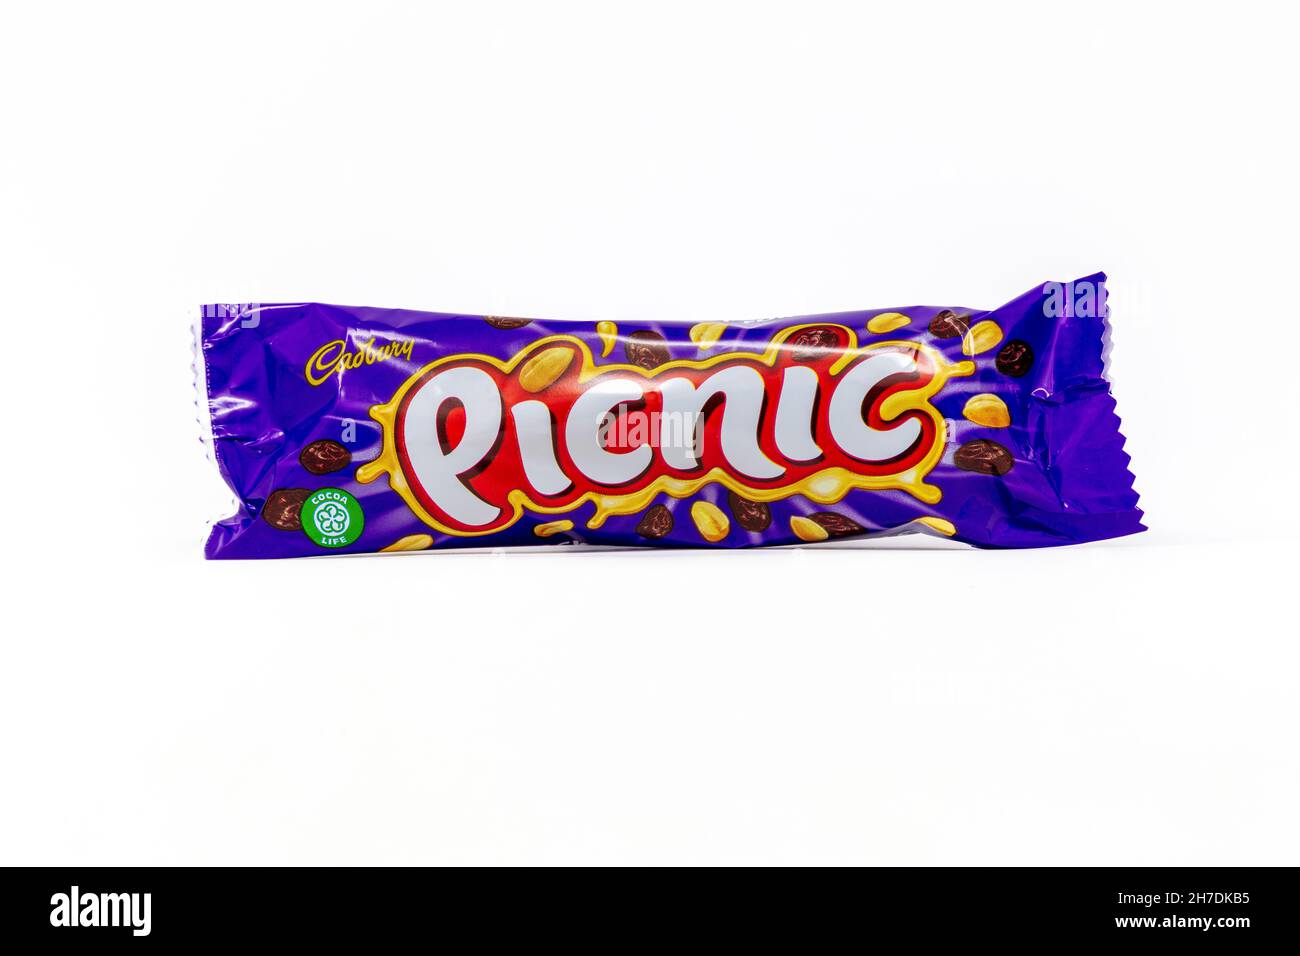 Cadbury Picnic chocolate bar on a white background Stock Photo